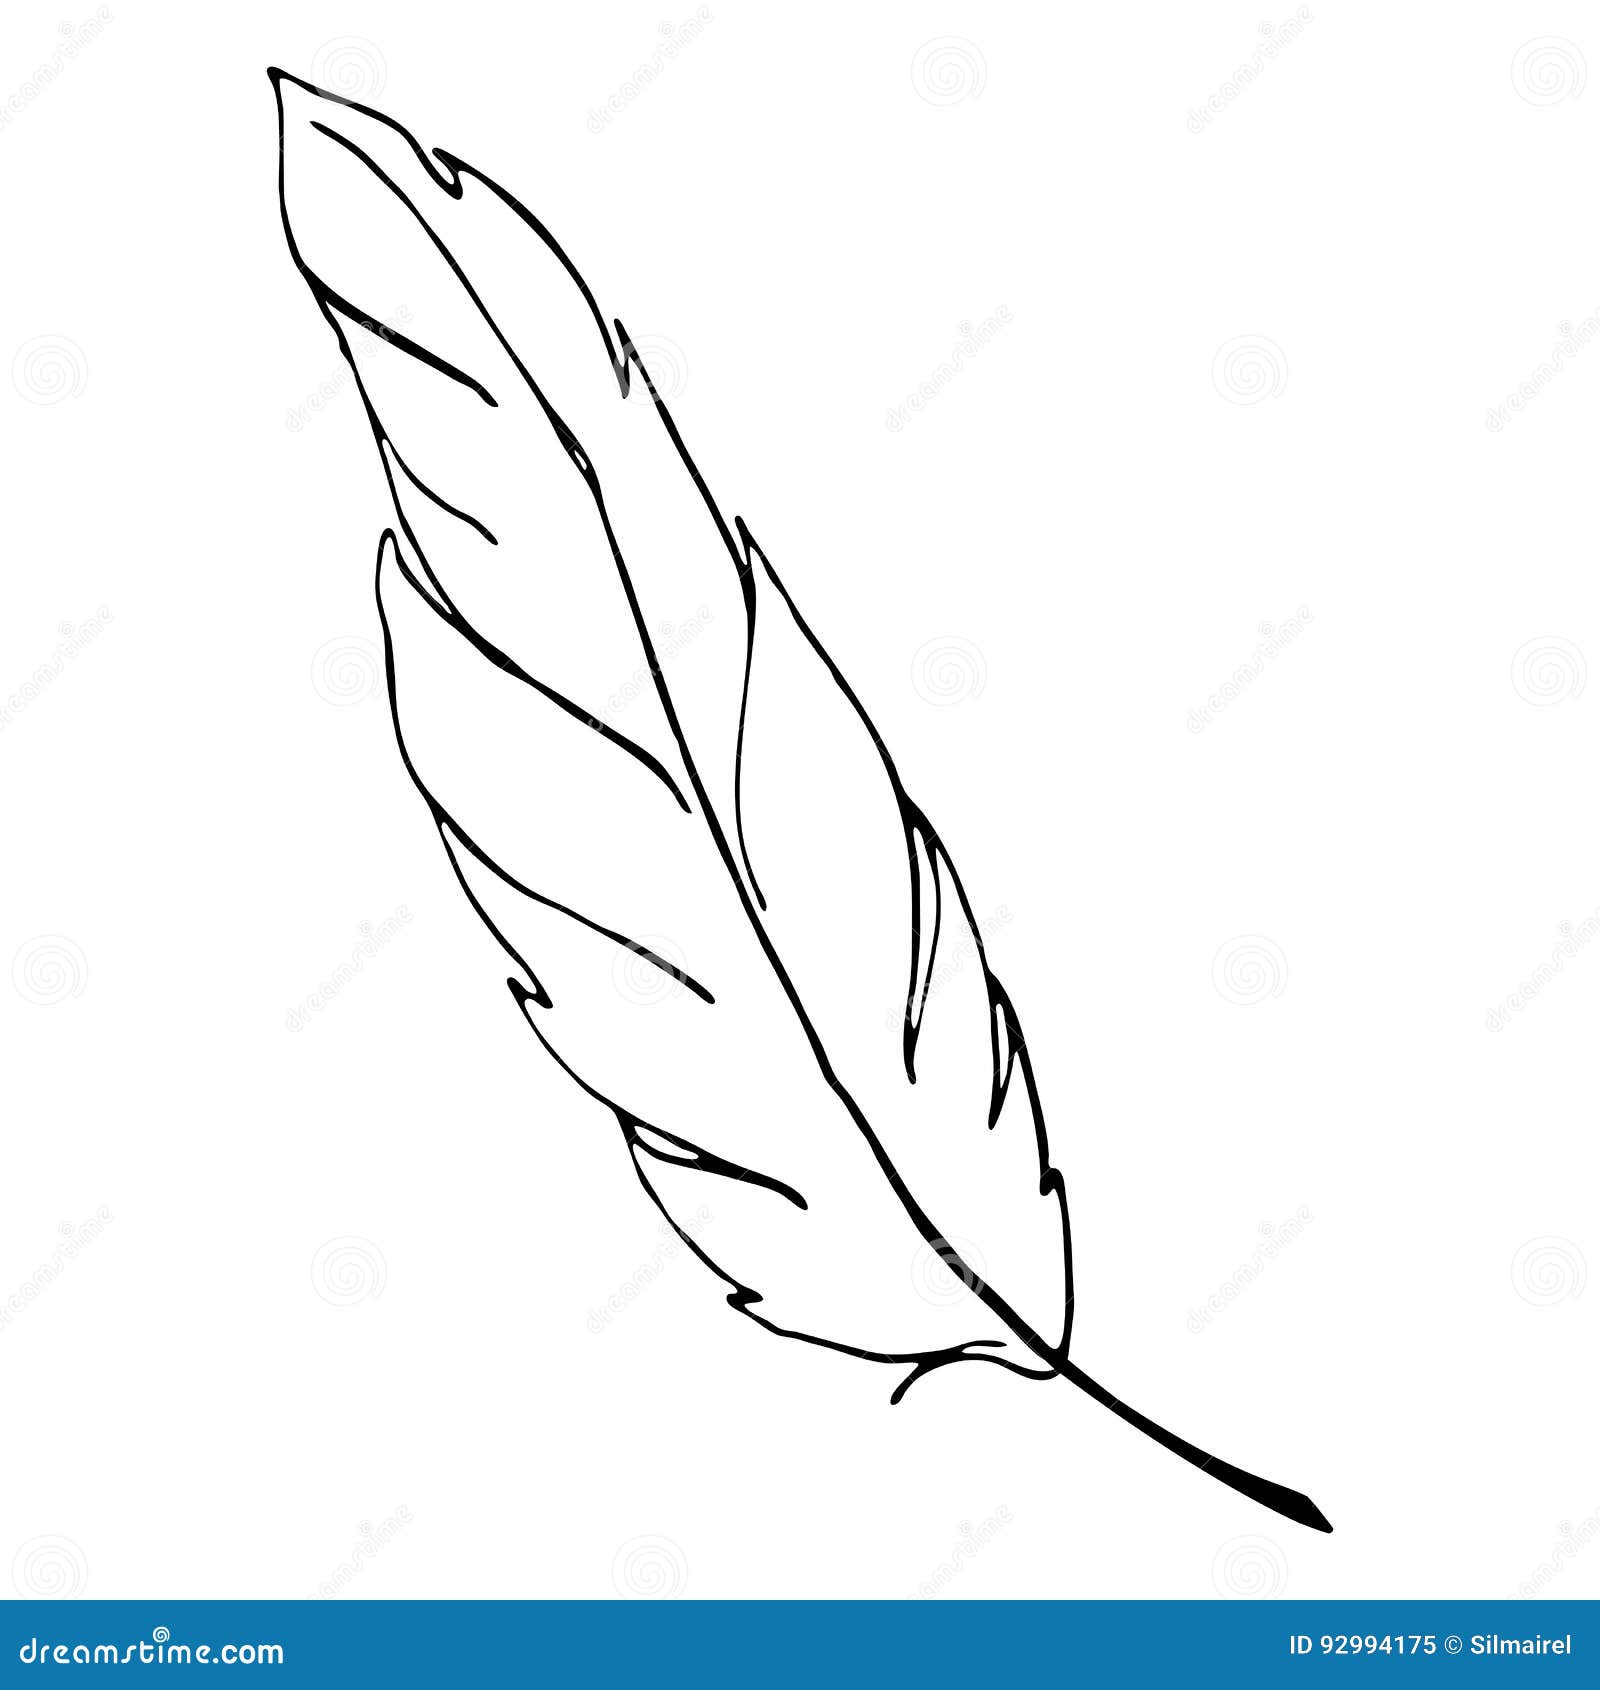 Monochrome Black and White Bird Feather Line Art Vector Stock Vector ...